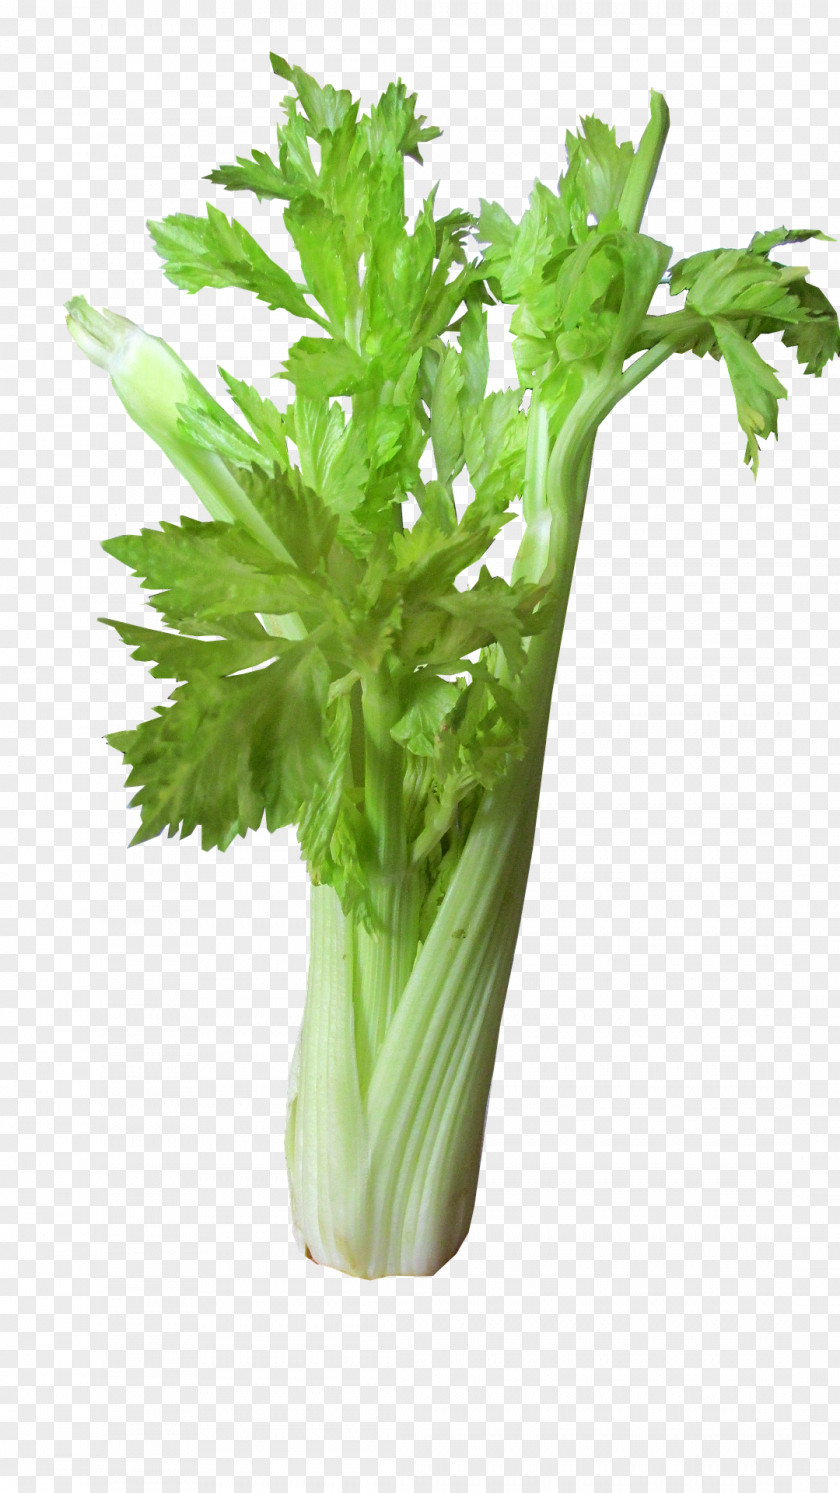 Green Salad Celery Leaf Vegetable Bloody Mary Juice PNG